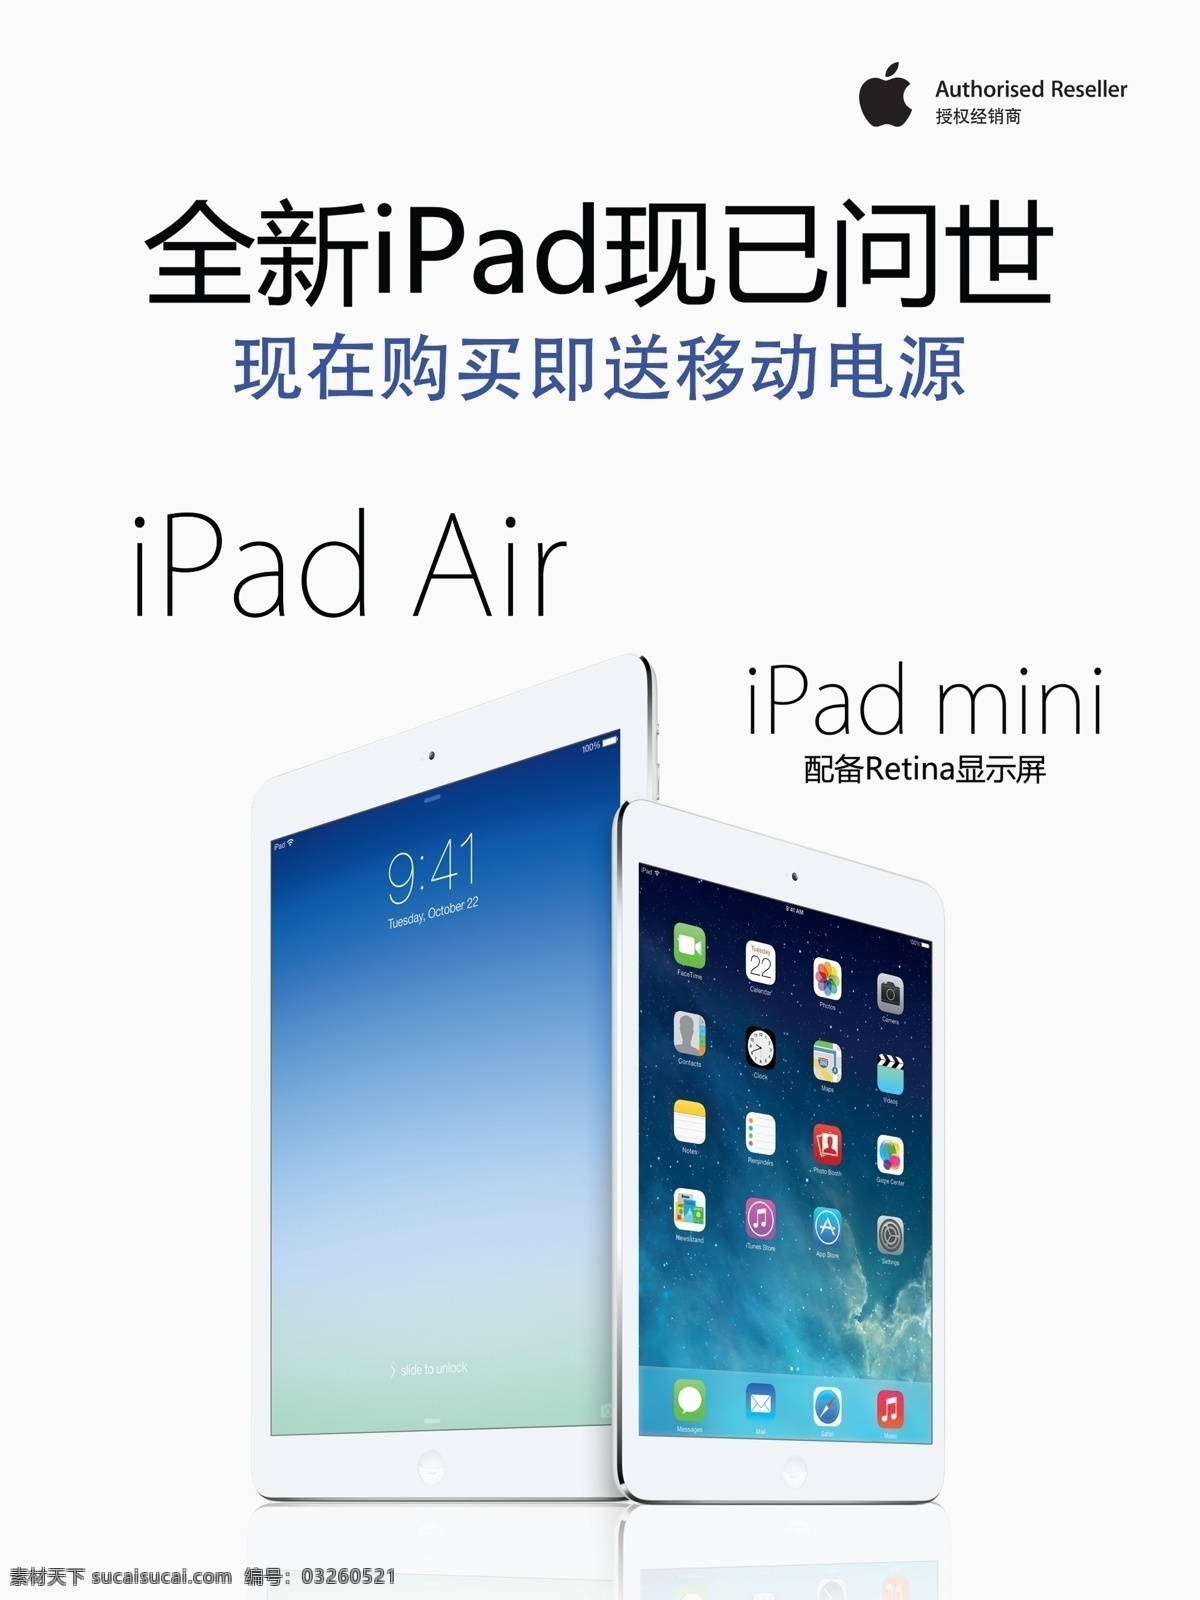 ipad ipadmini 广告设计模板 平板电脑海报 苹果 苹果ipad 新品上市 模板下载 air 源文件 其他海报设计